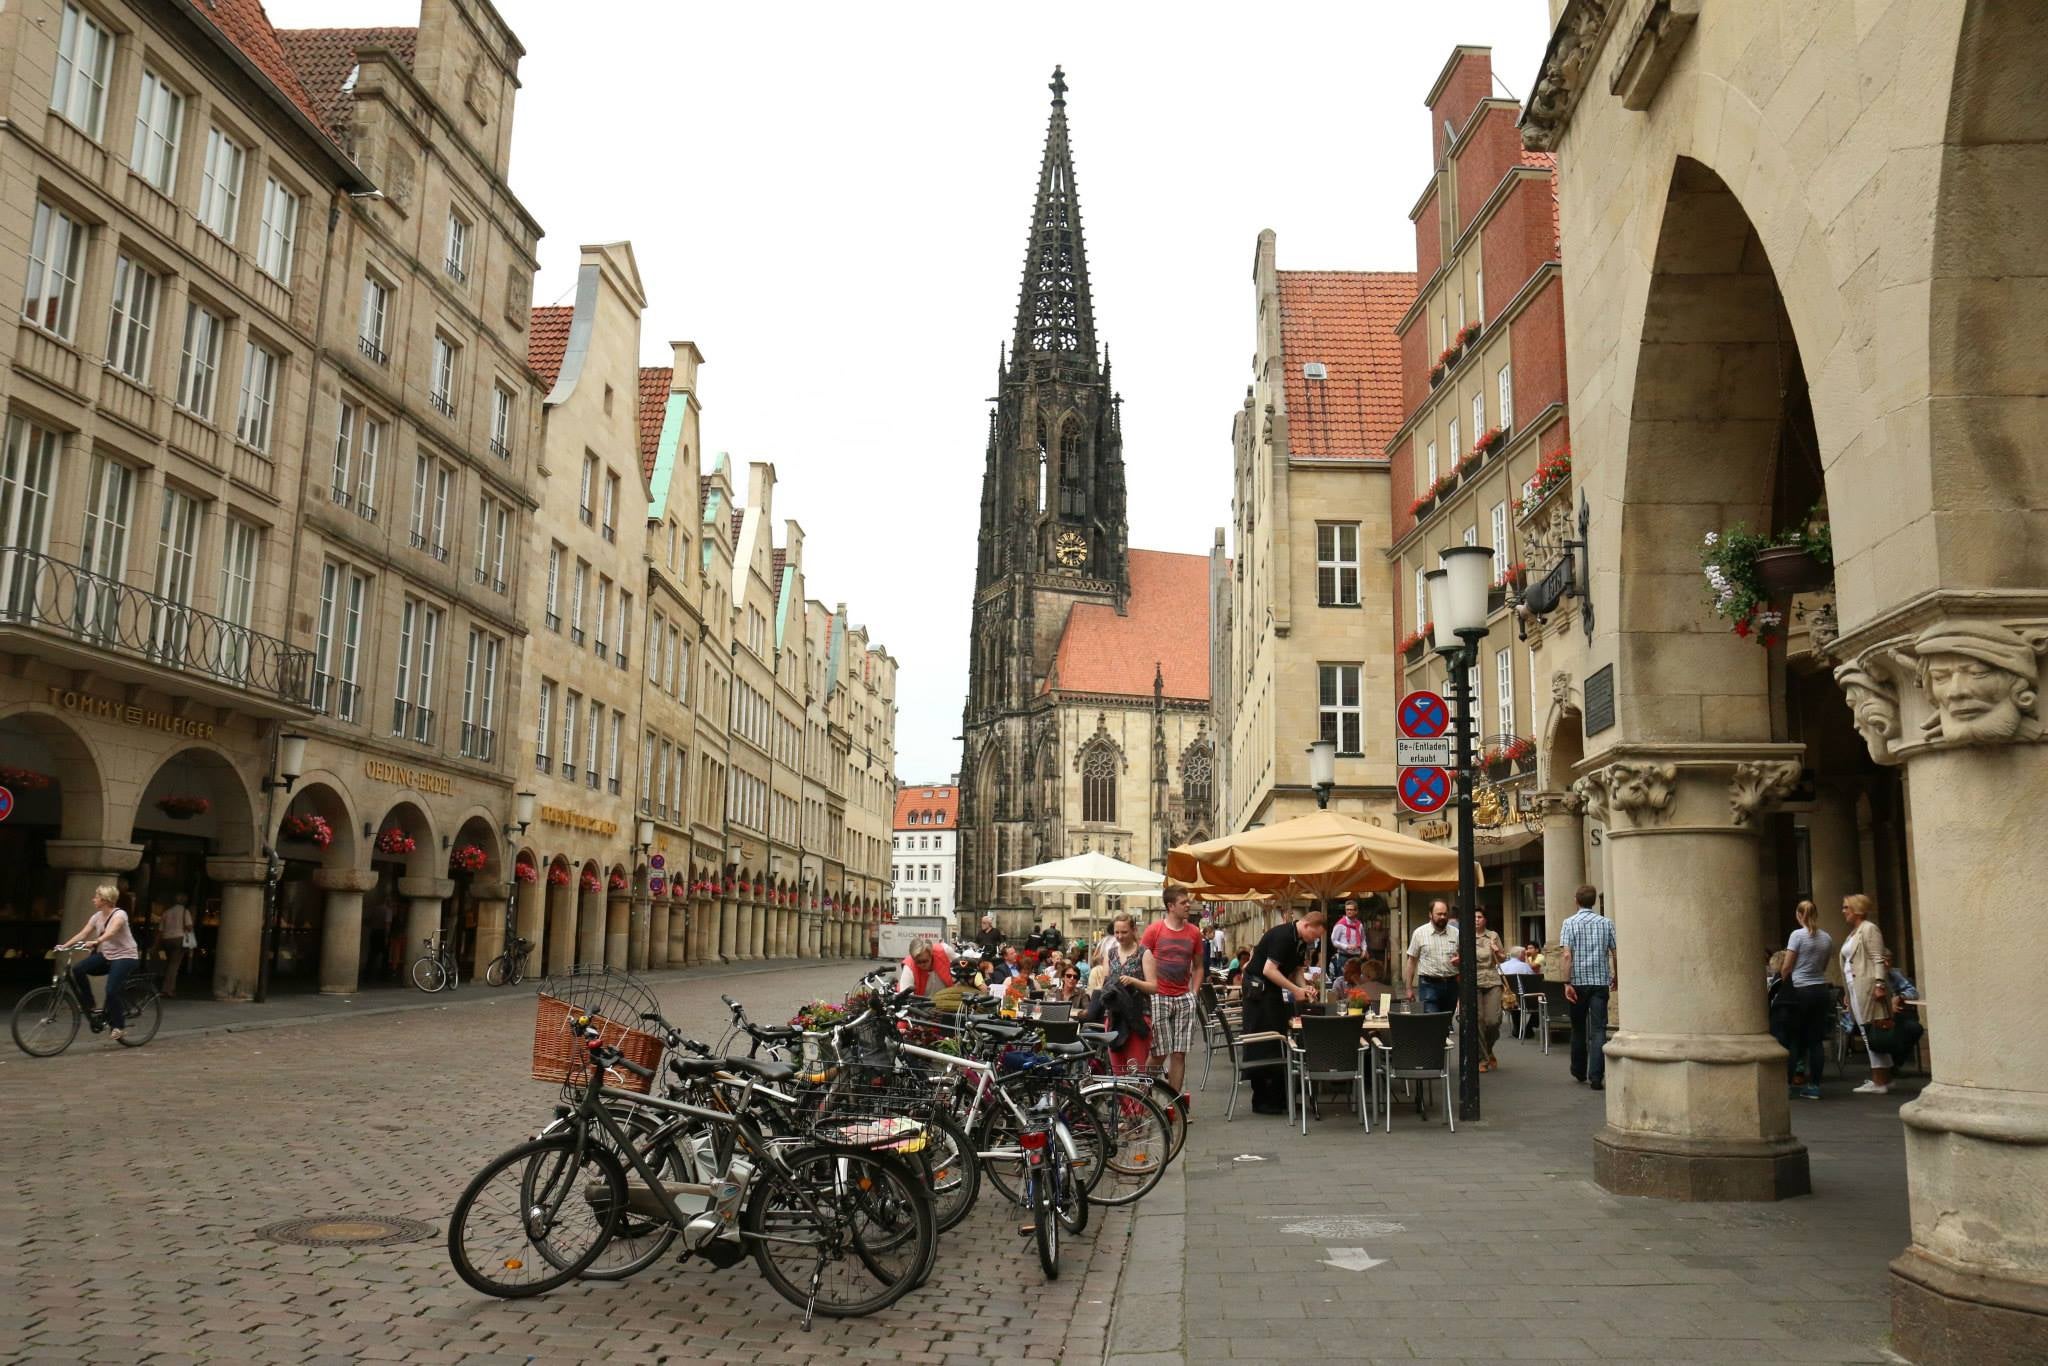  Bikes parked in front of Lambertikirche (St. Lambert's Church)in—  Münster.. (Marielle Segarra/WHYY)  